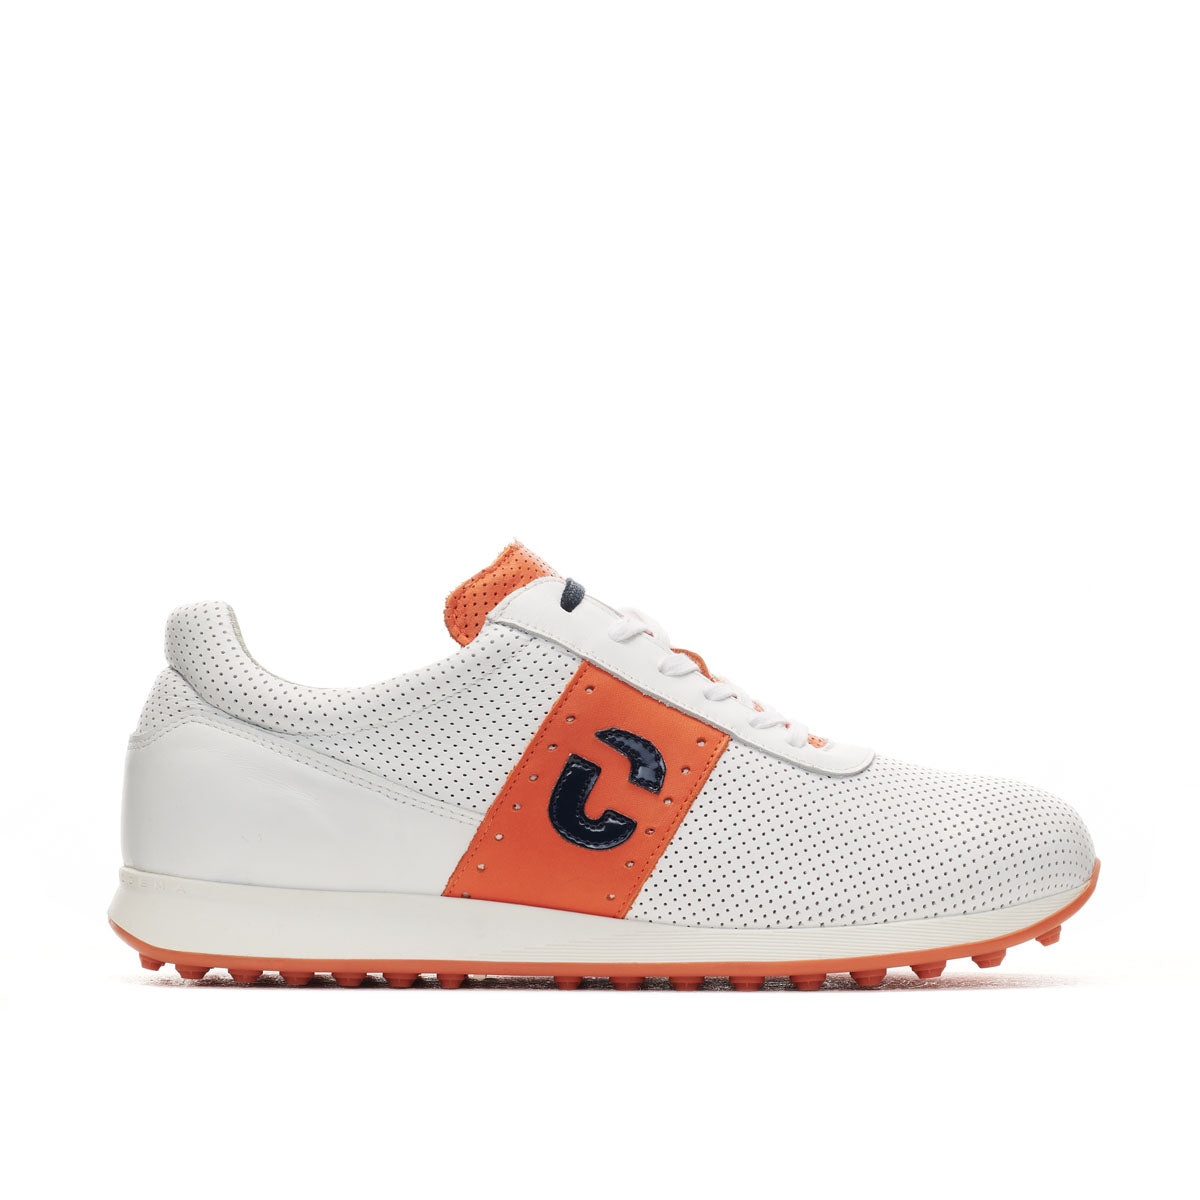 Belair White/Orange - Men's Golf Shoe